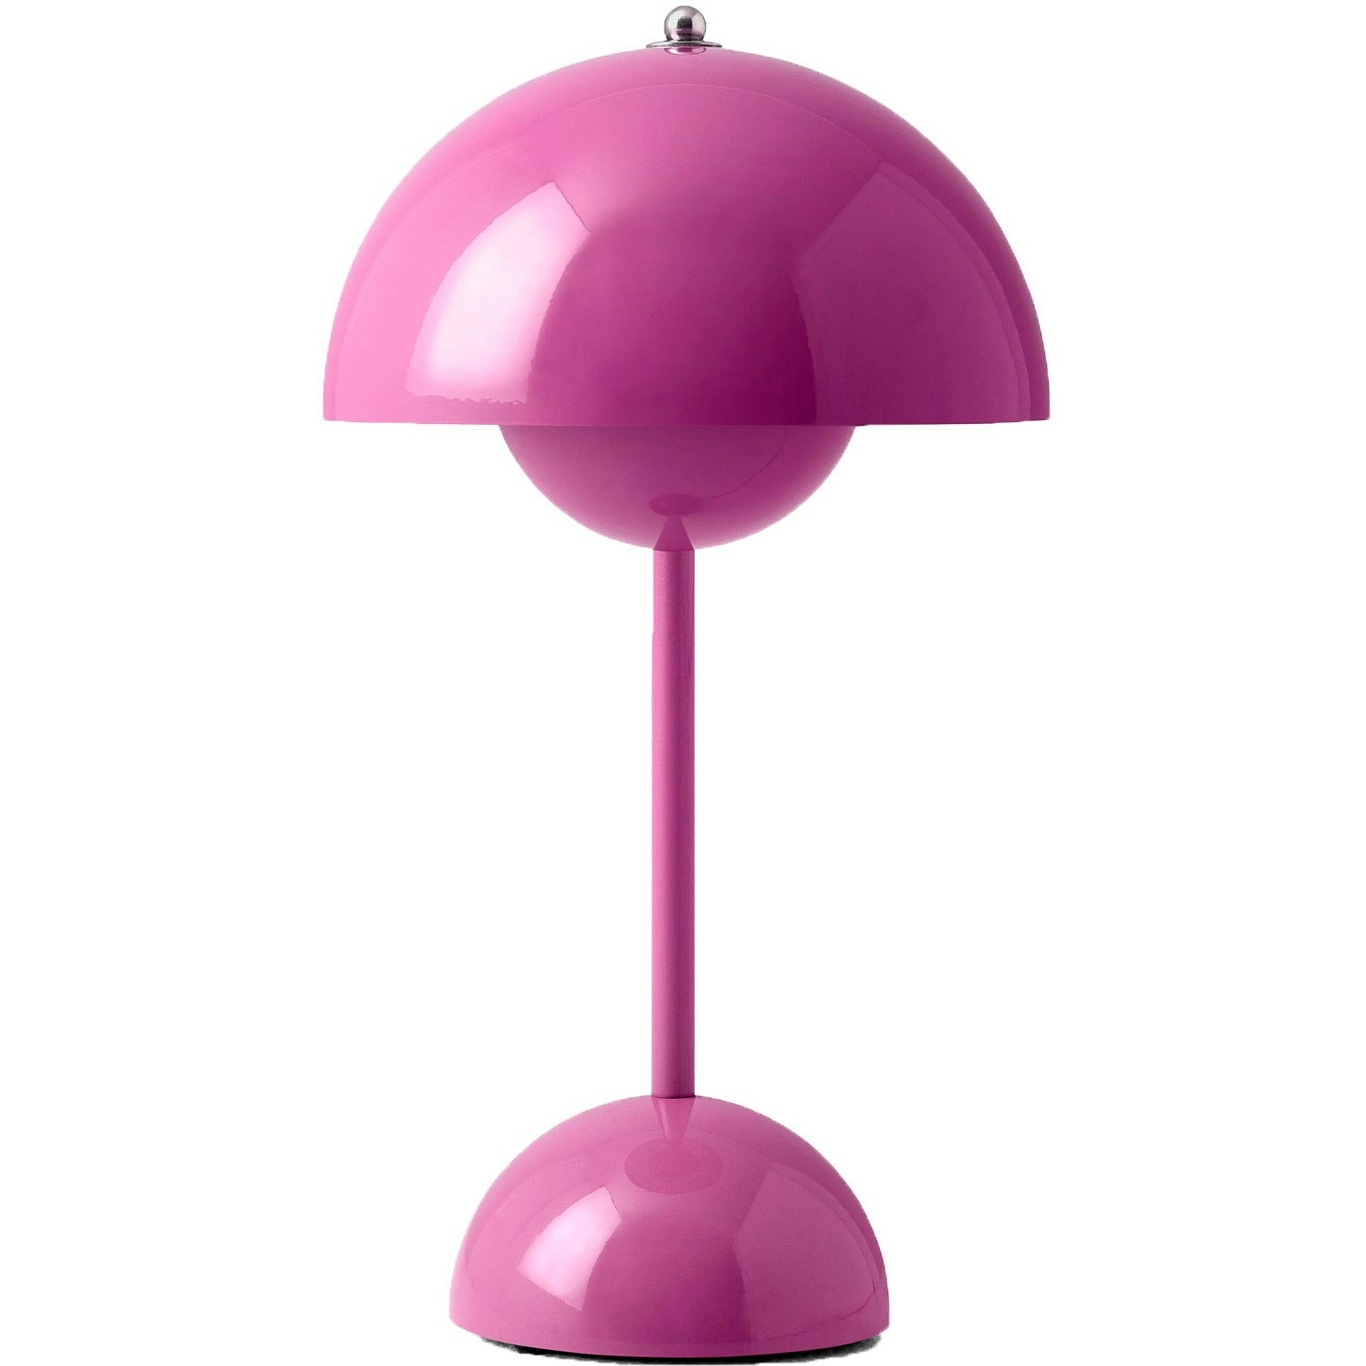 Flowerpot VP9 Tischlampe Tragbar, Tangy Pink